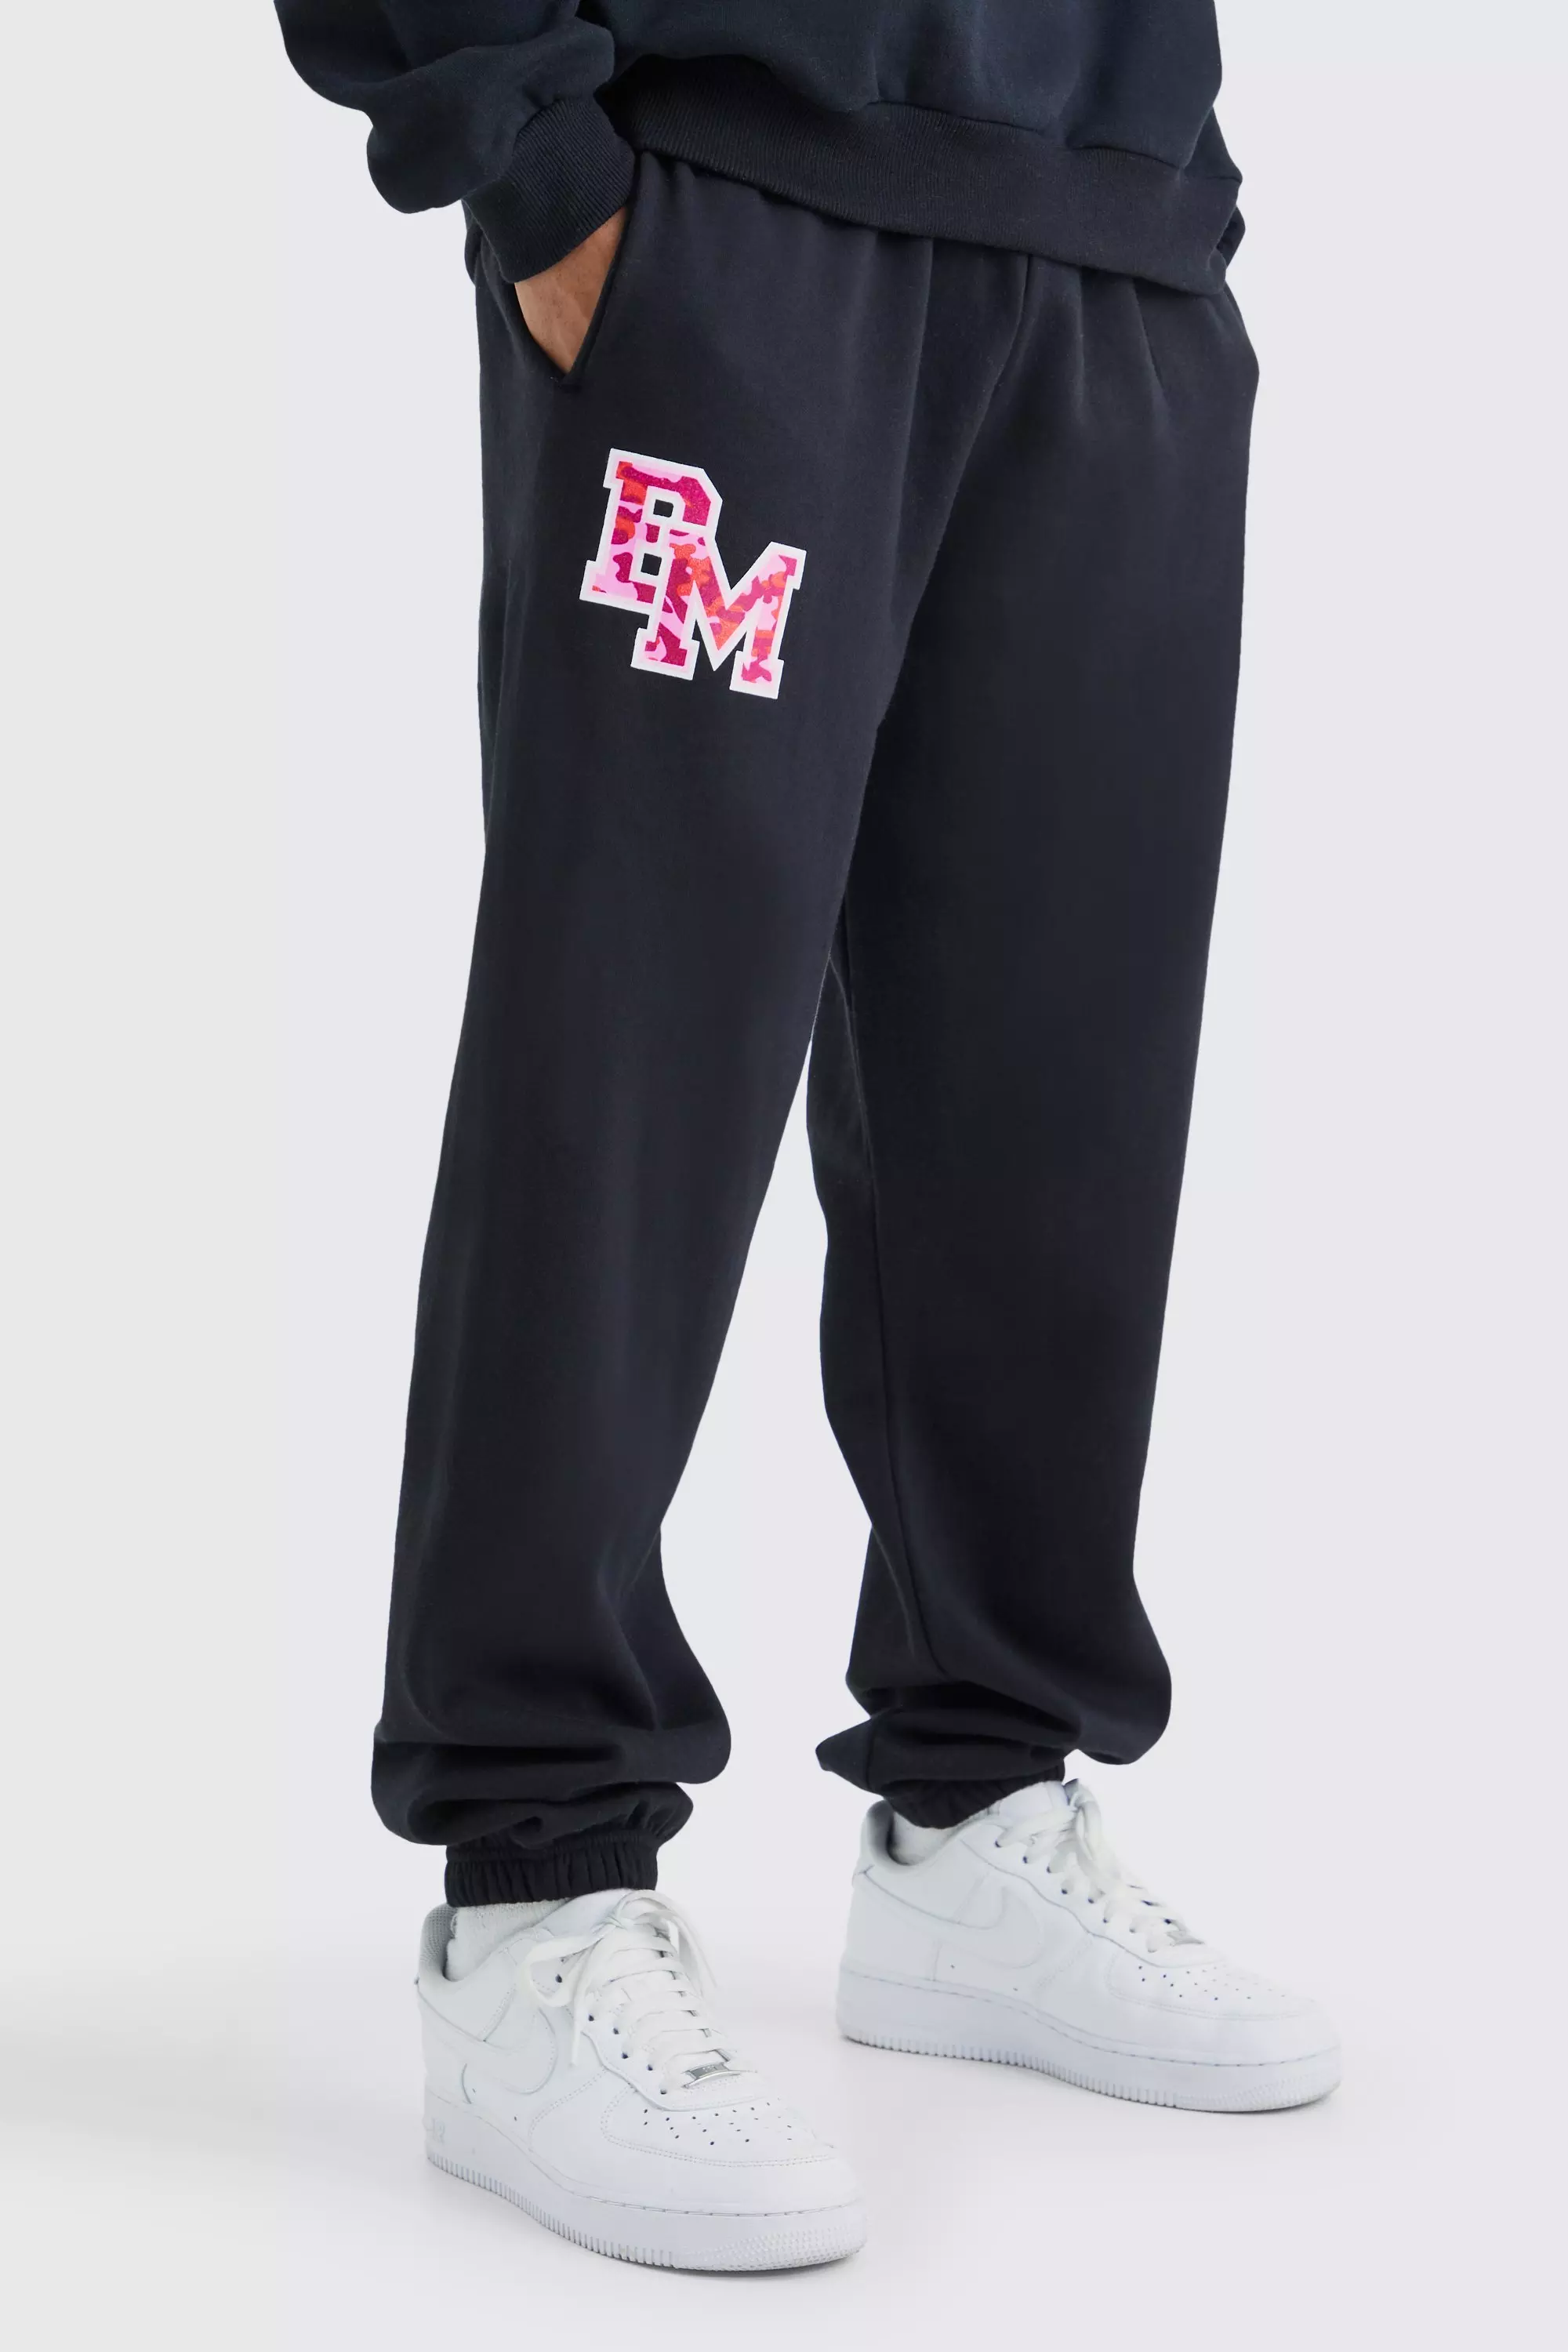 Black Oversized Bm Varsity Graphic Sweatpants